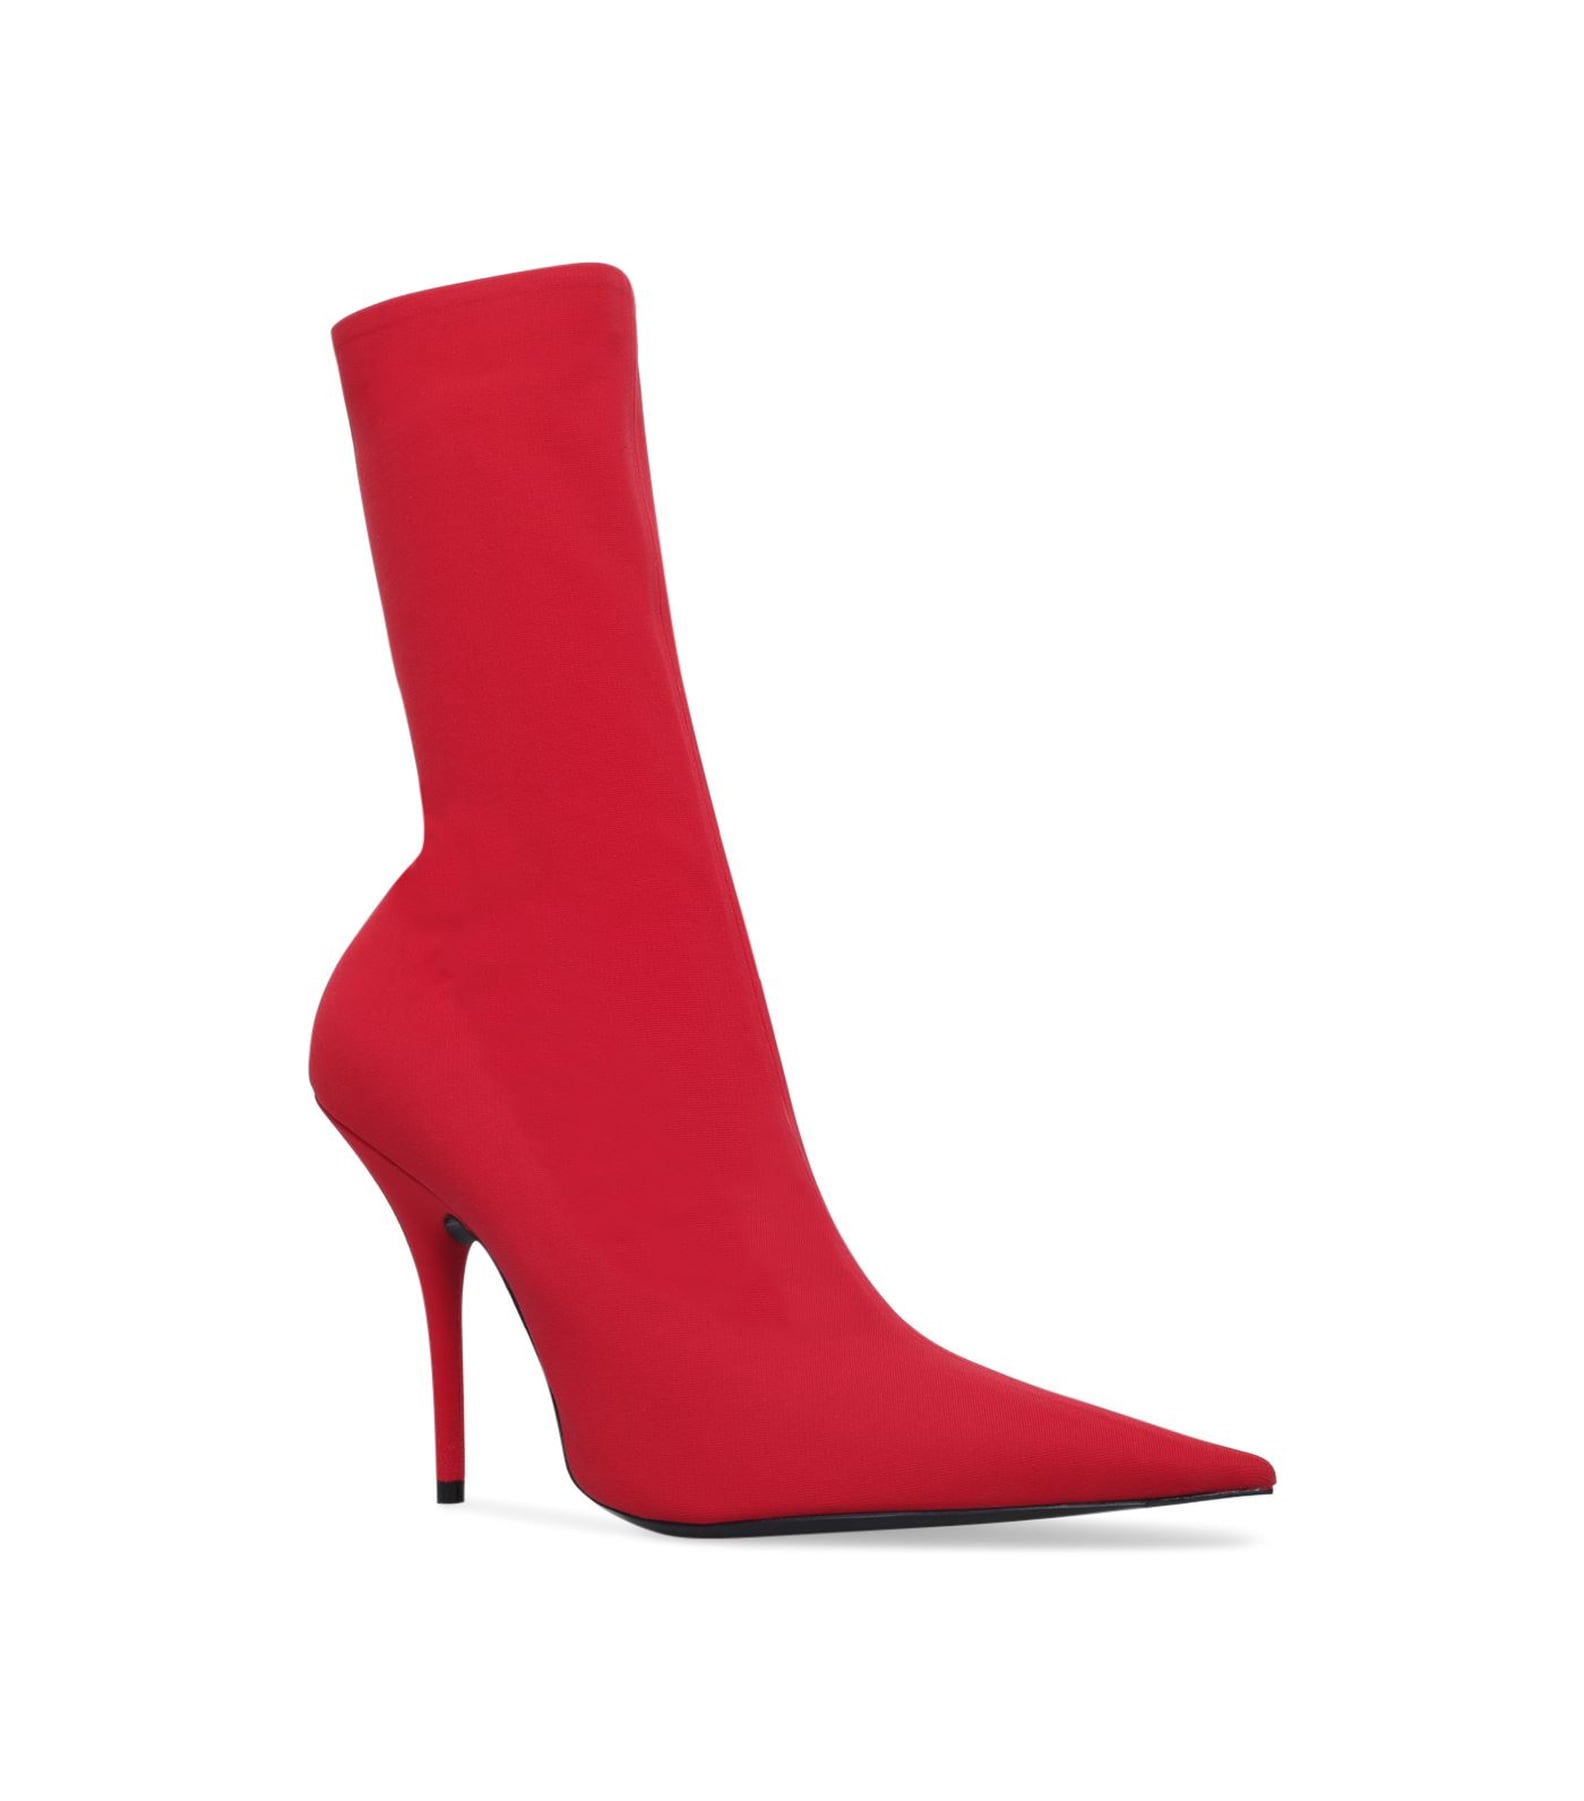 Gigi Hadid's Red Sock Boots | POPSUGAR Fashion